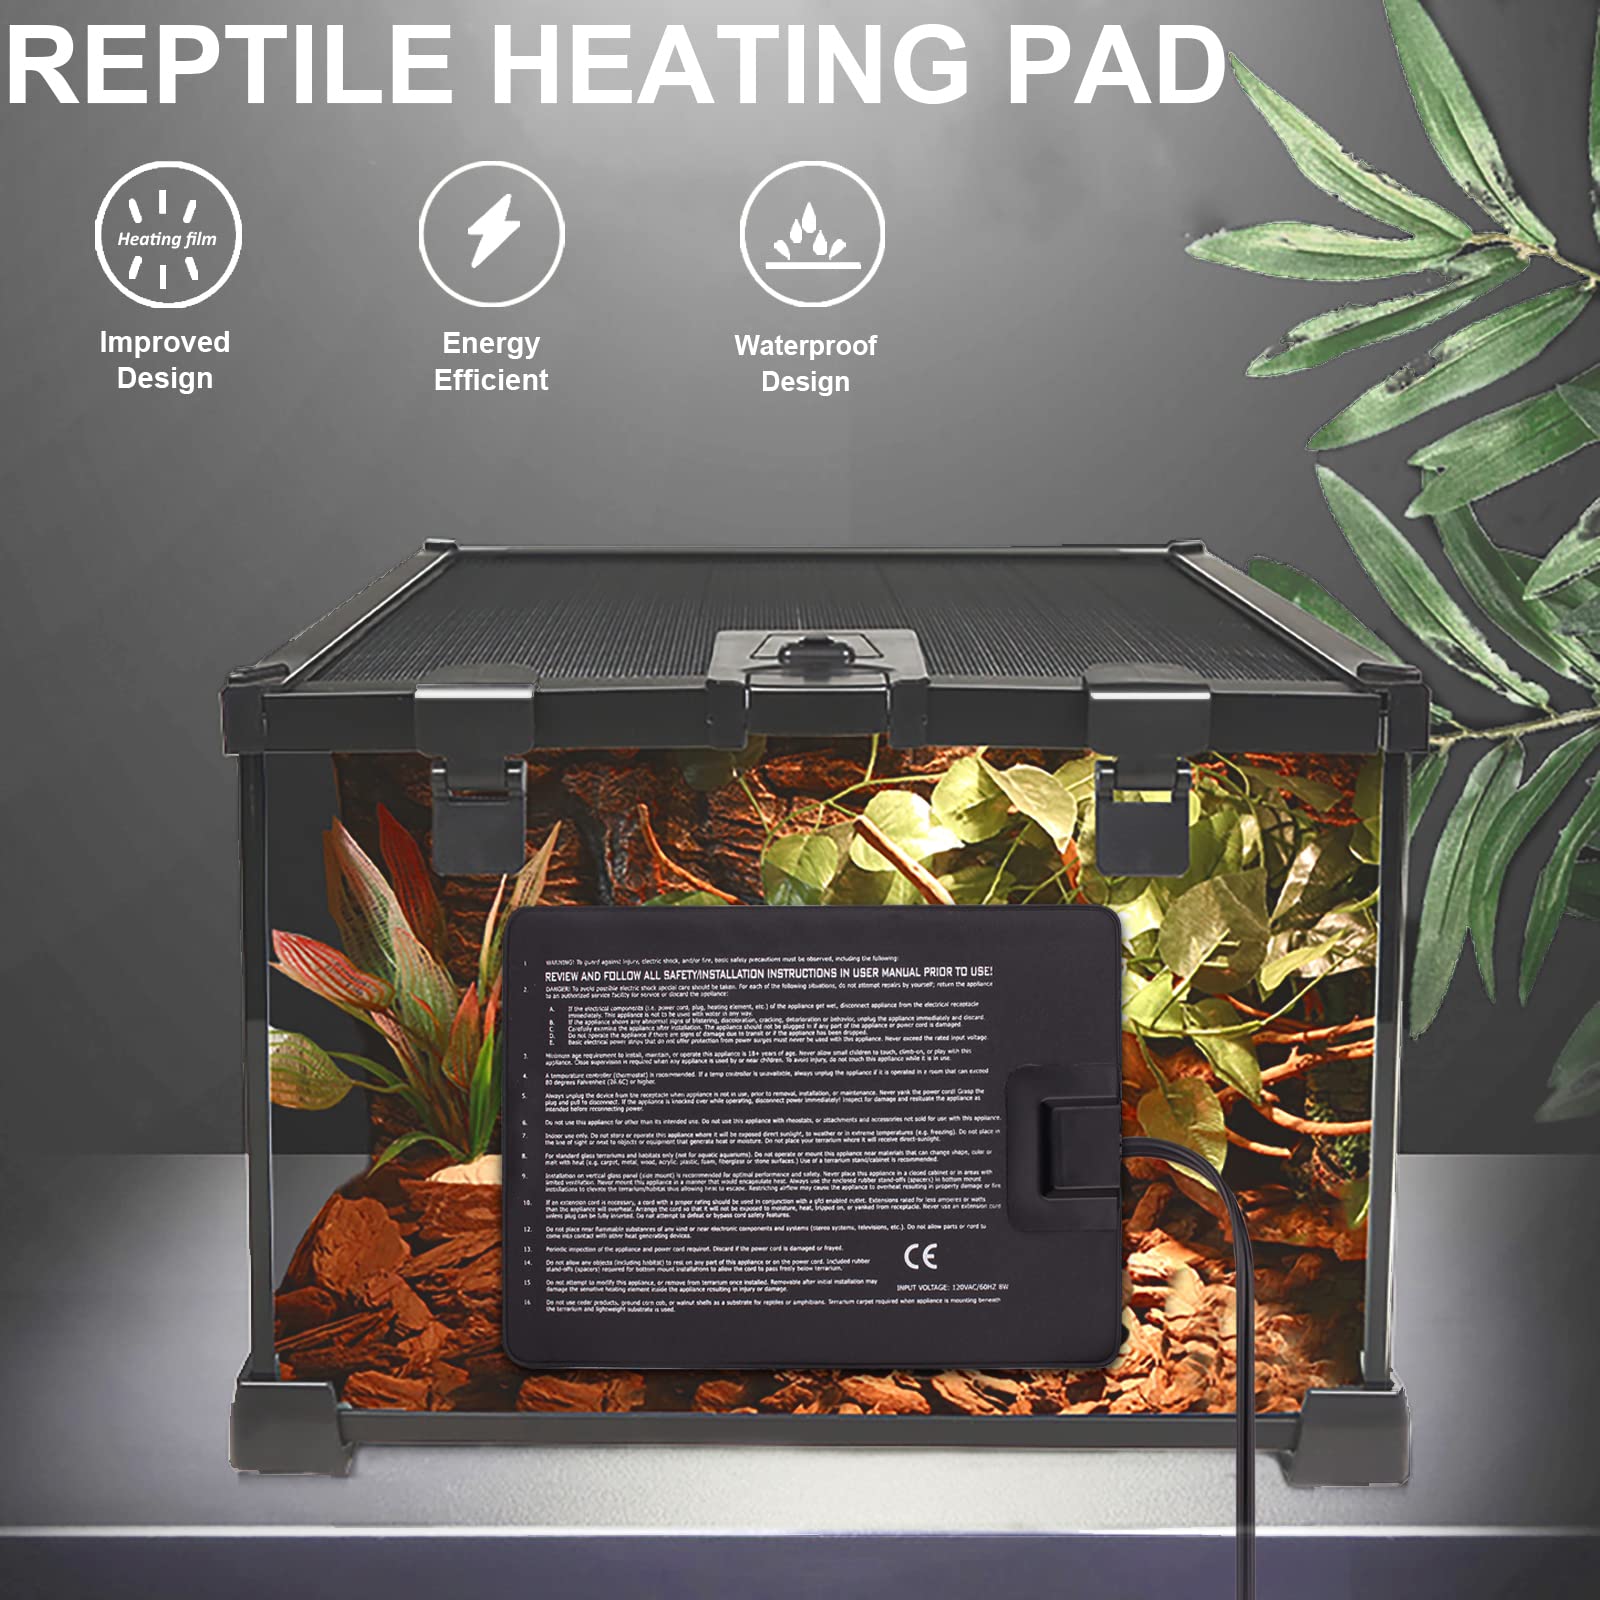 Aiicioo Reptile Heating Pad - Hermit Crab Heater Heat Mat for Reptiles Snake Lizard Terrarium 8 Watt